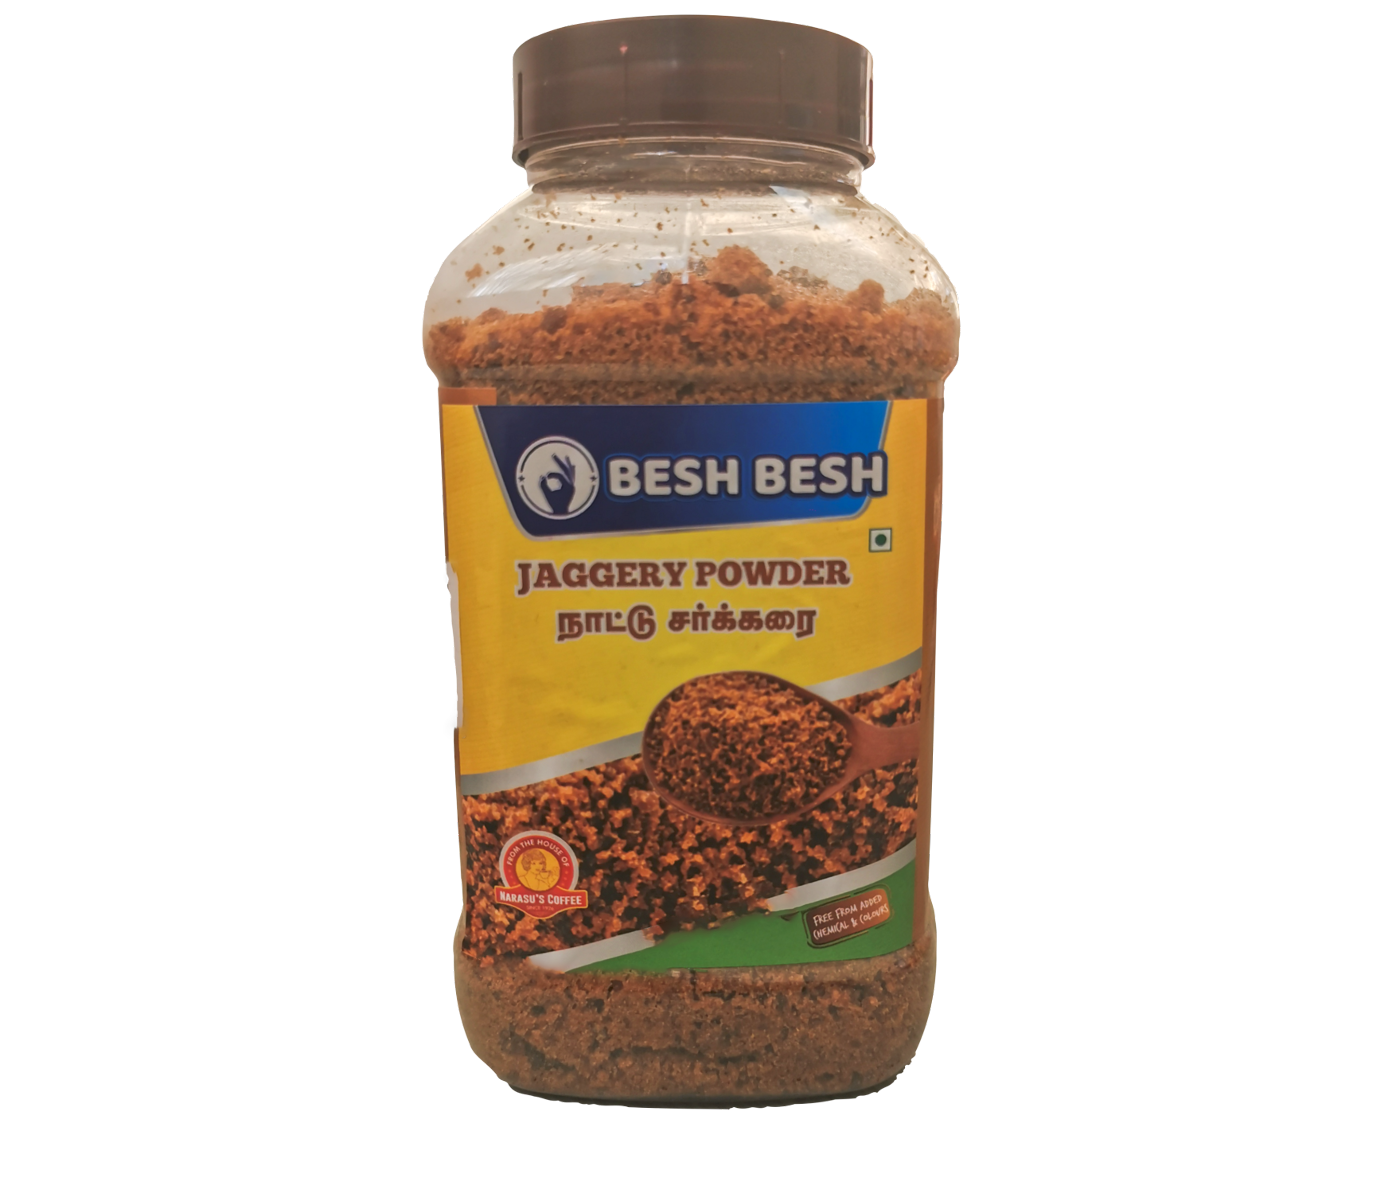 Besh Besh Jaggery Powder (Cane Sugar)